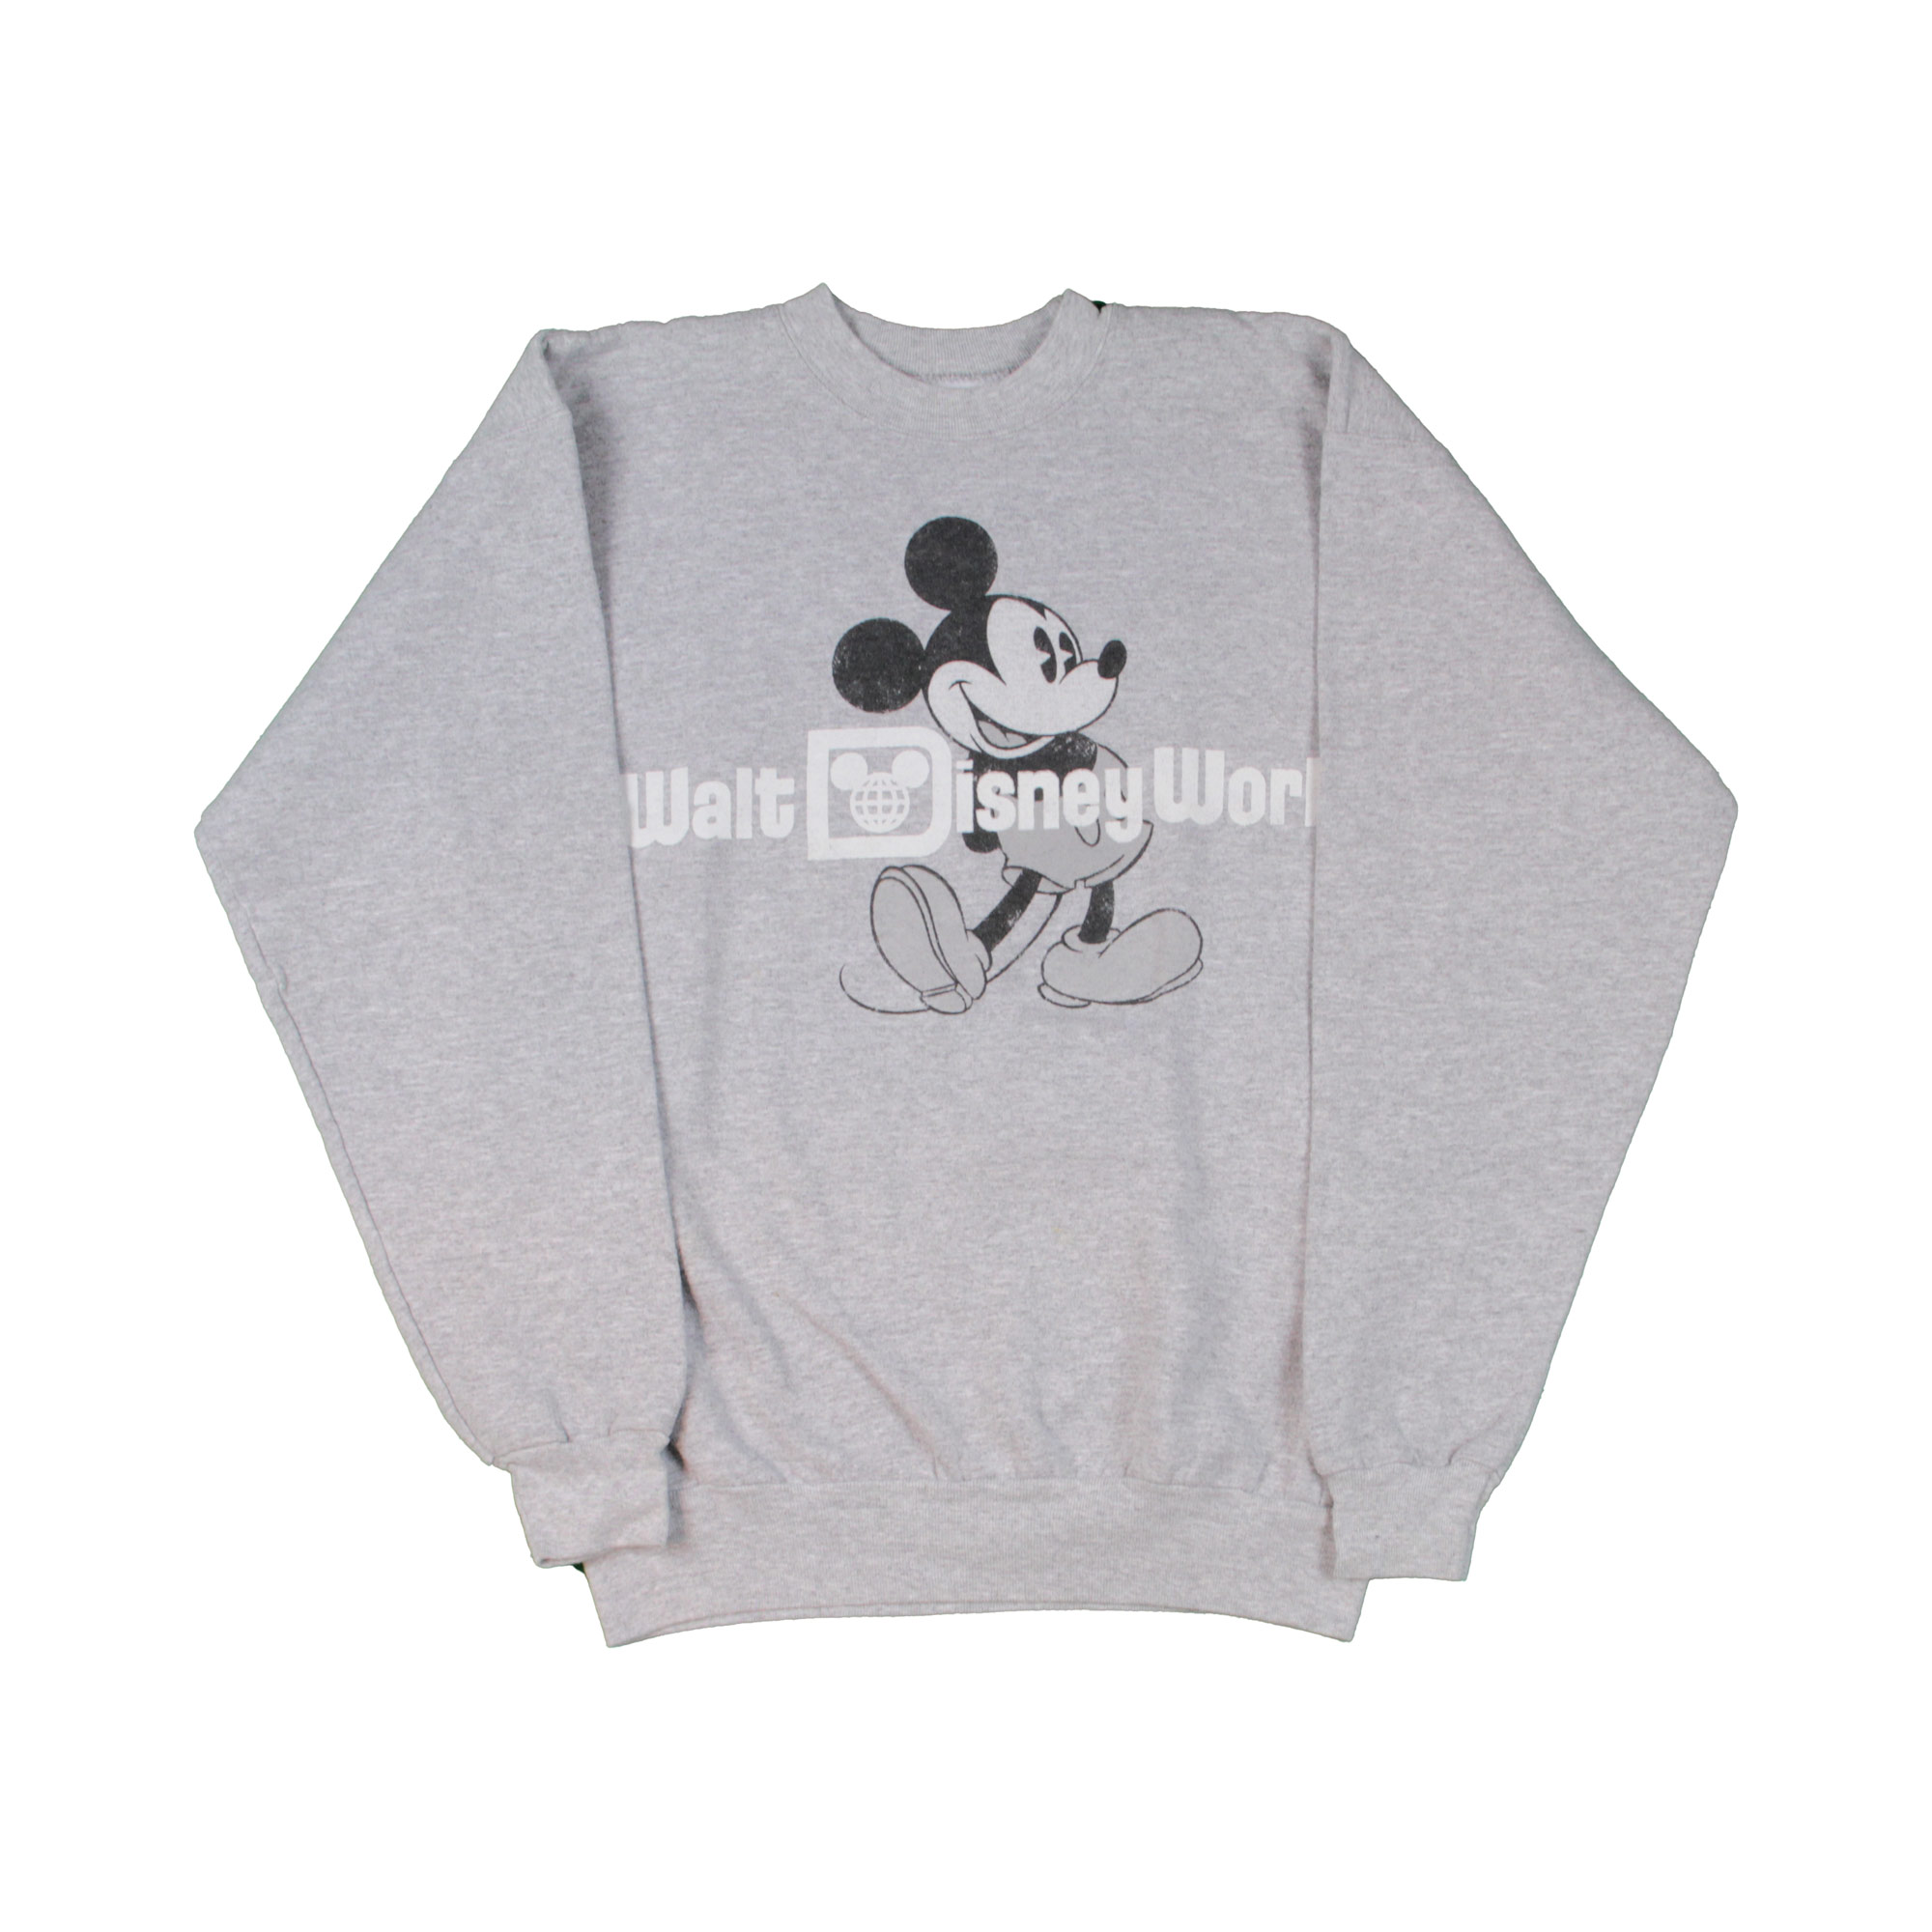 Walt Disney World Sweatshirt - M